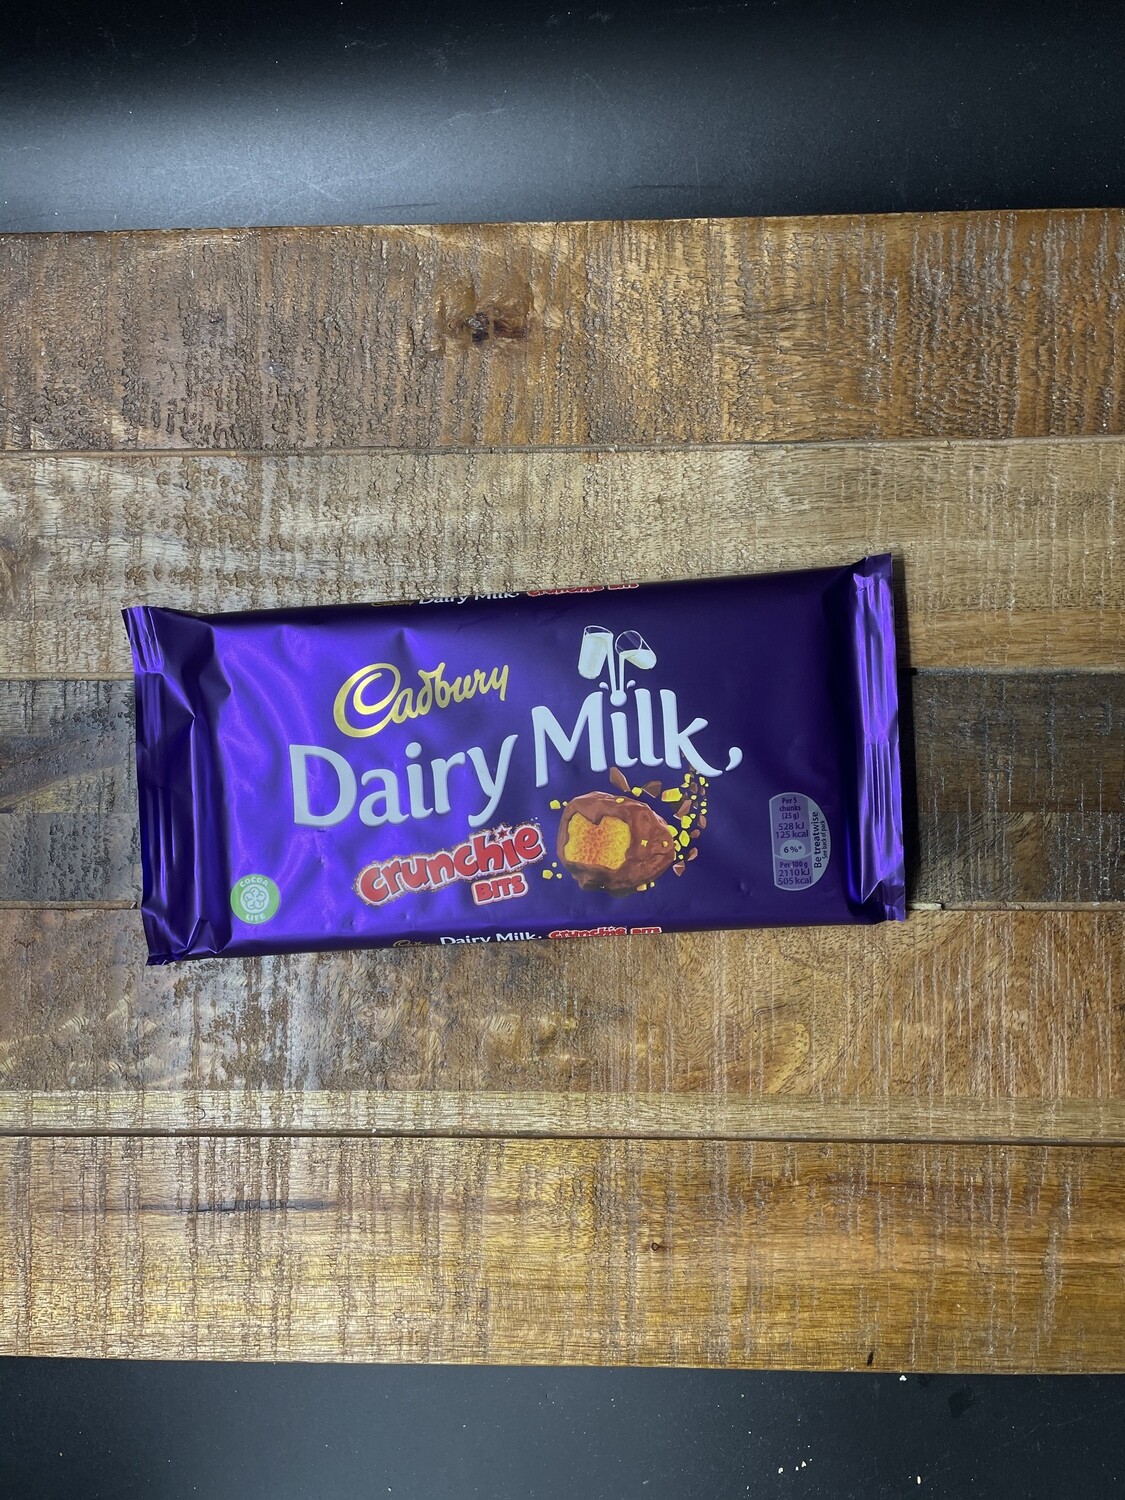 Cadbury Dairy Milk Crunchie Bits 180g